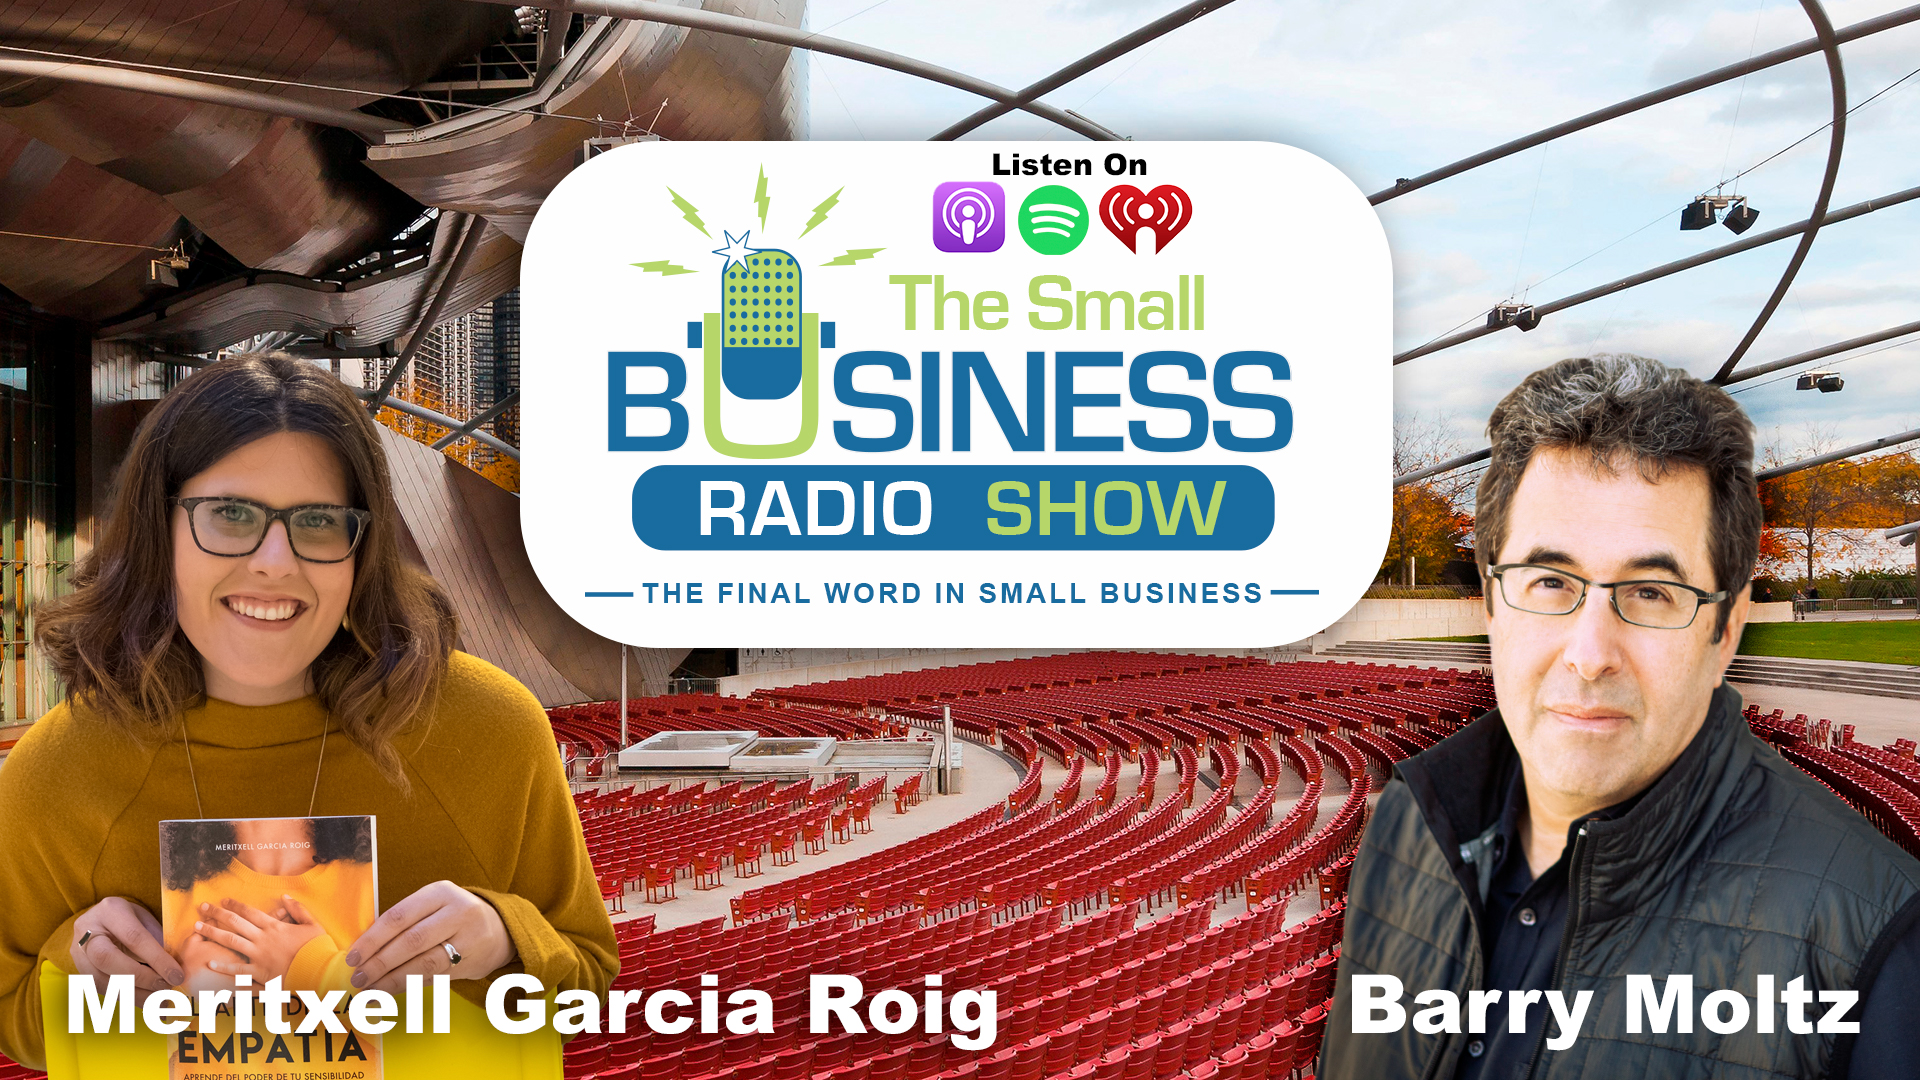 Meritxell Garcia Roig on The Small Business Radio Show